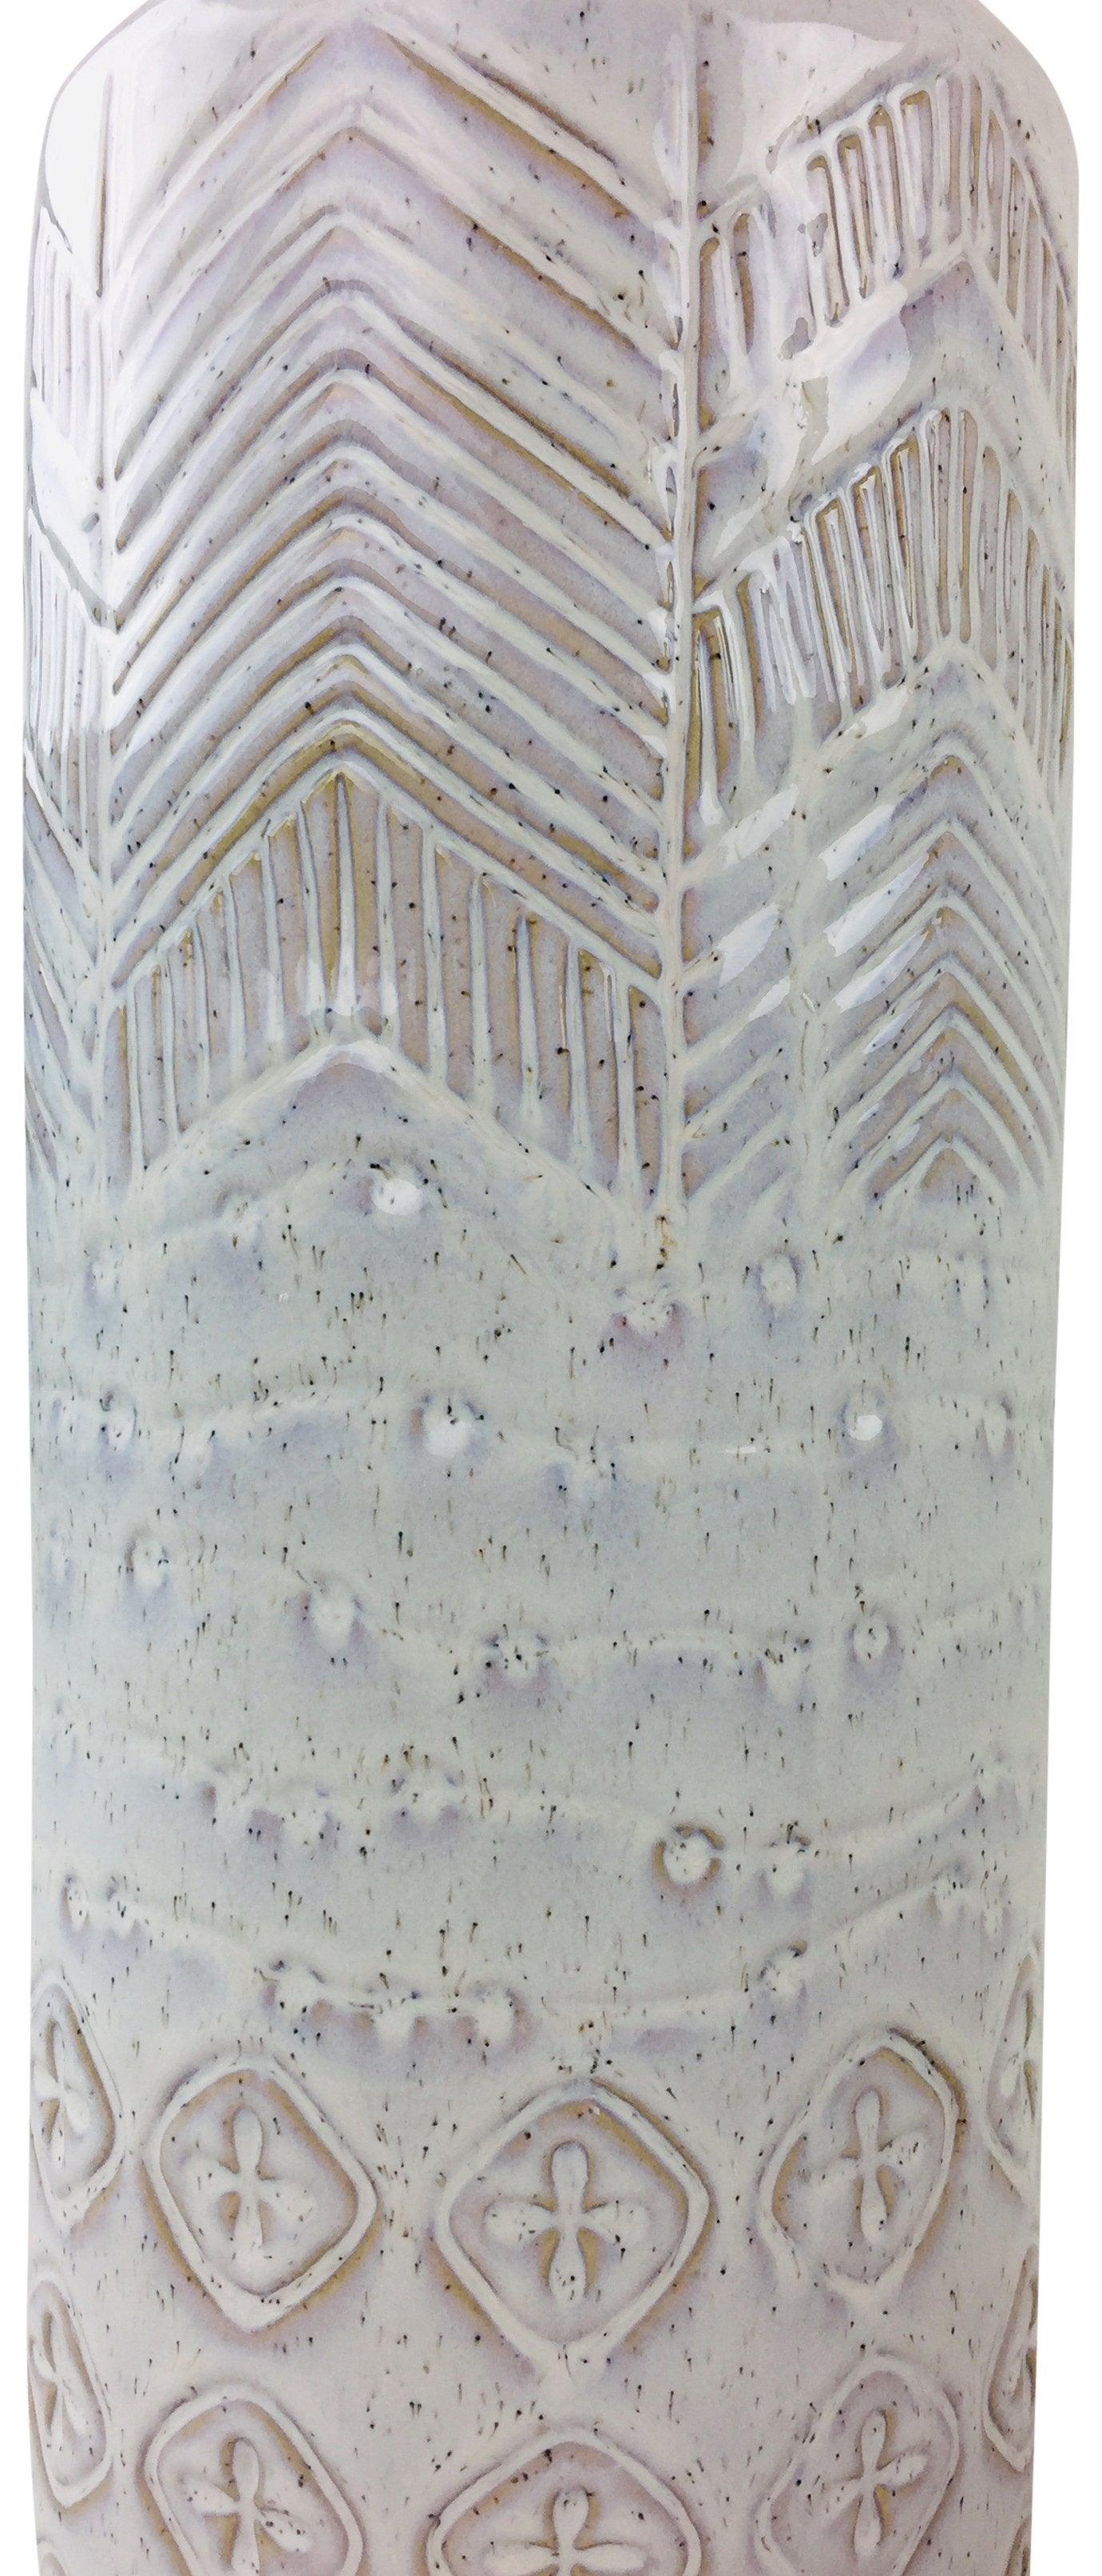 View White Herringbone Textured Stoneware Vase 44cm information